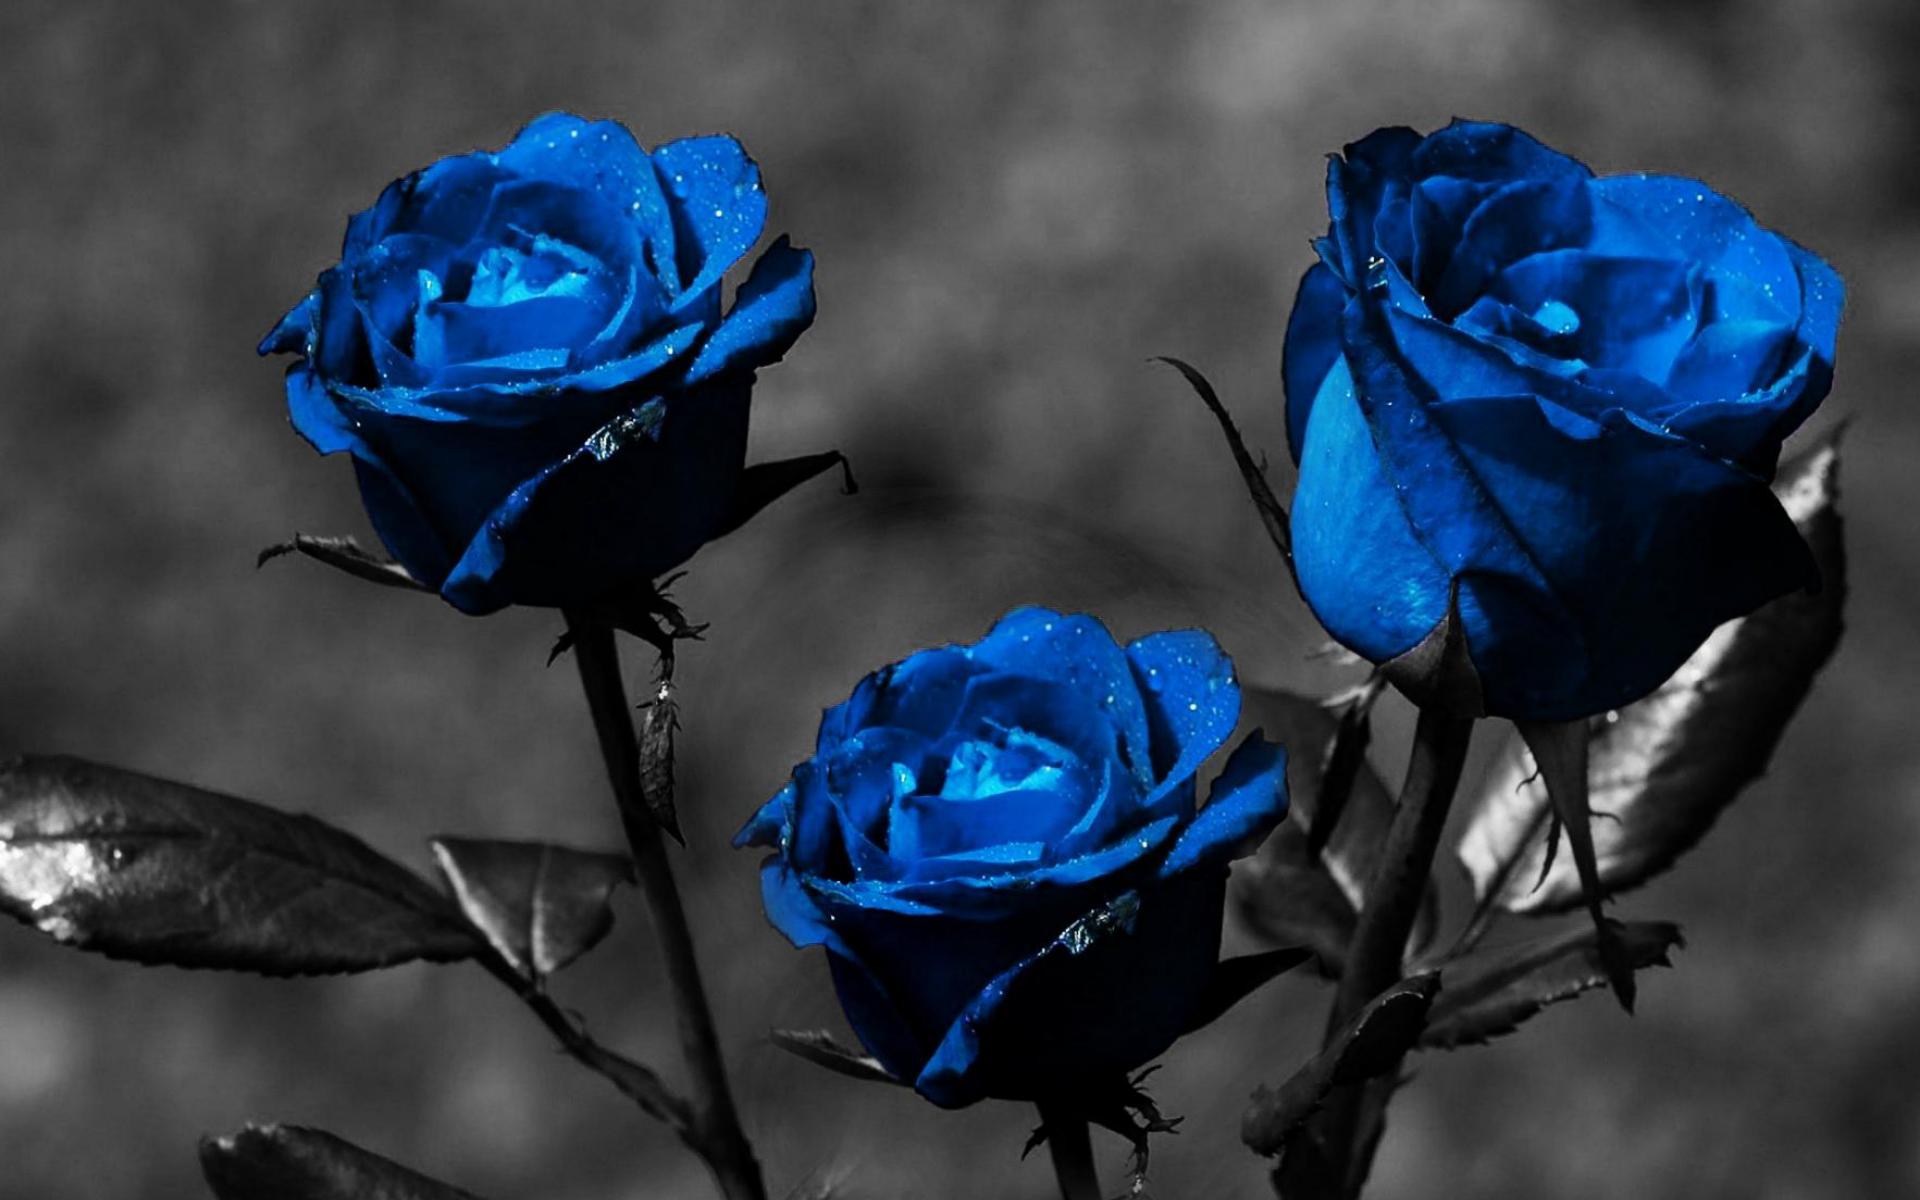 Download wallpaper 3840x2160 portrait of blue rose beautiful flower dark 4k  wallpaper uhd wallpaper 169 widescreen 3840x2160 hd background 27641